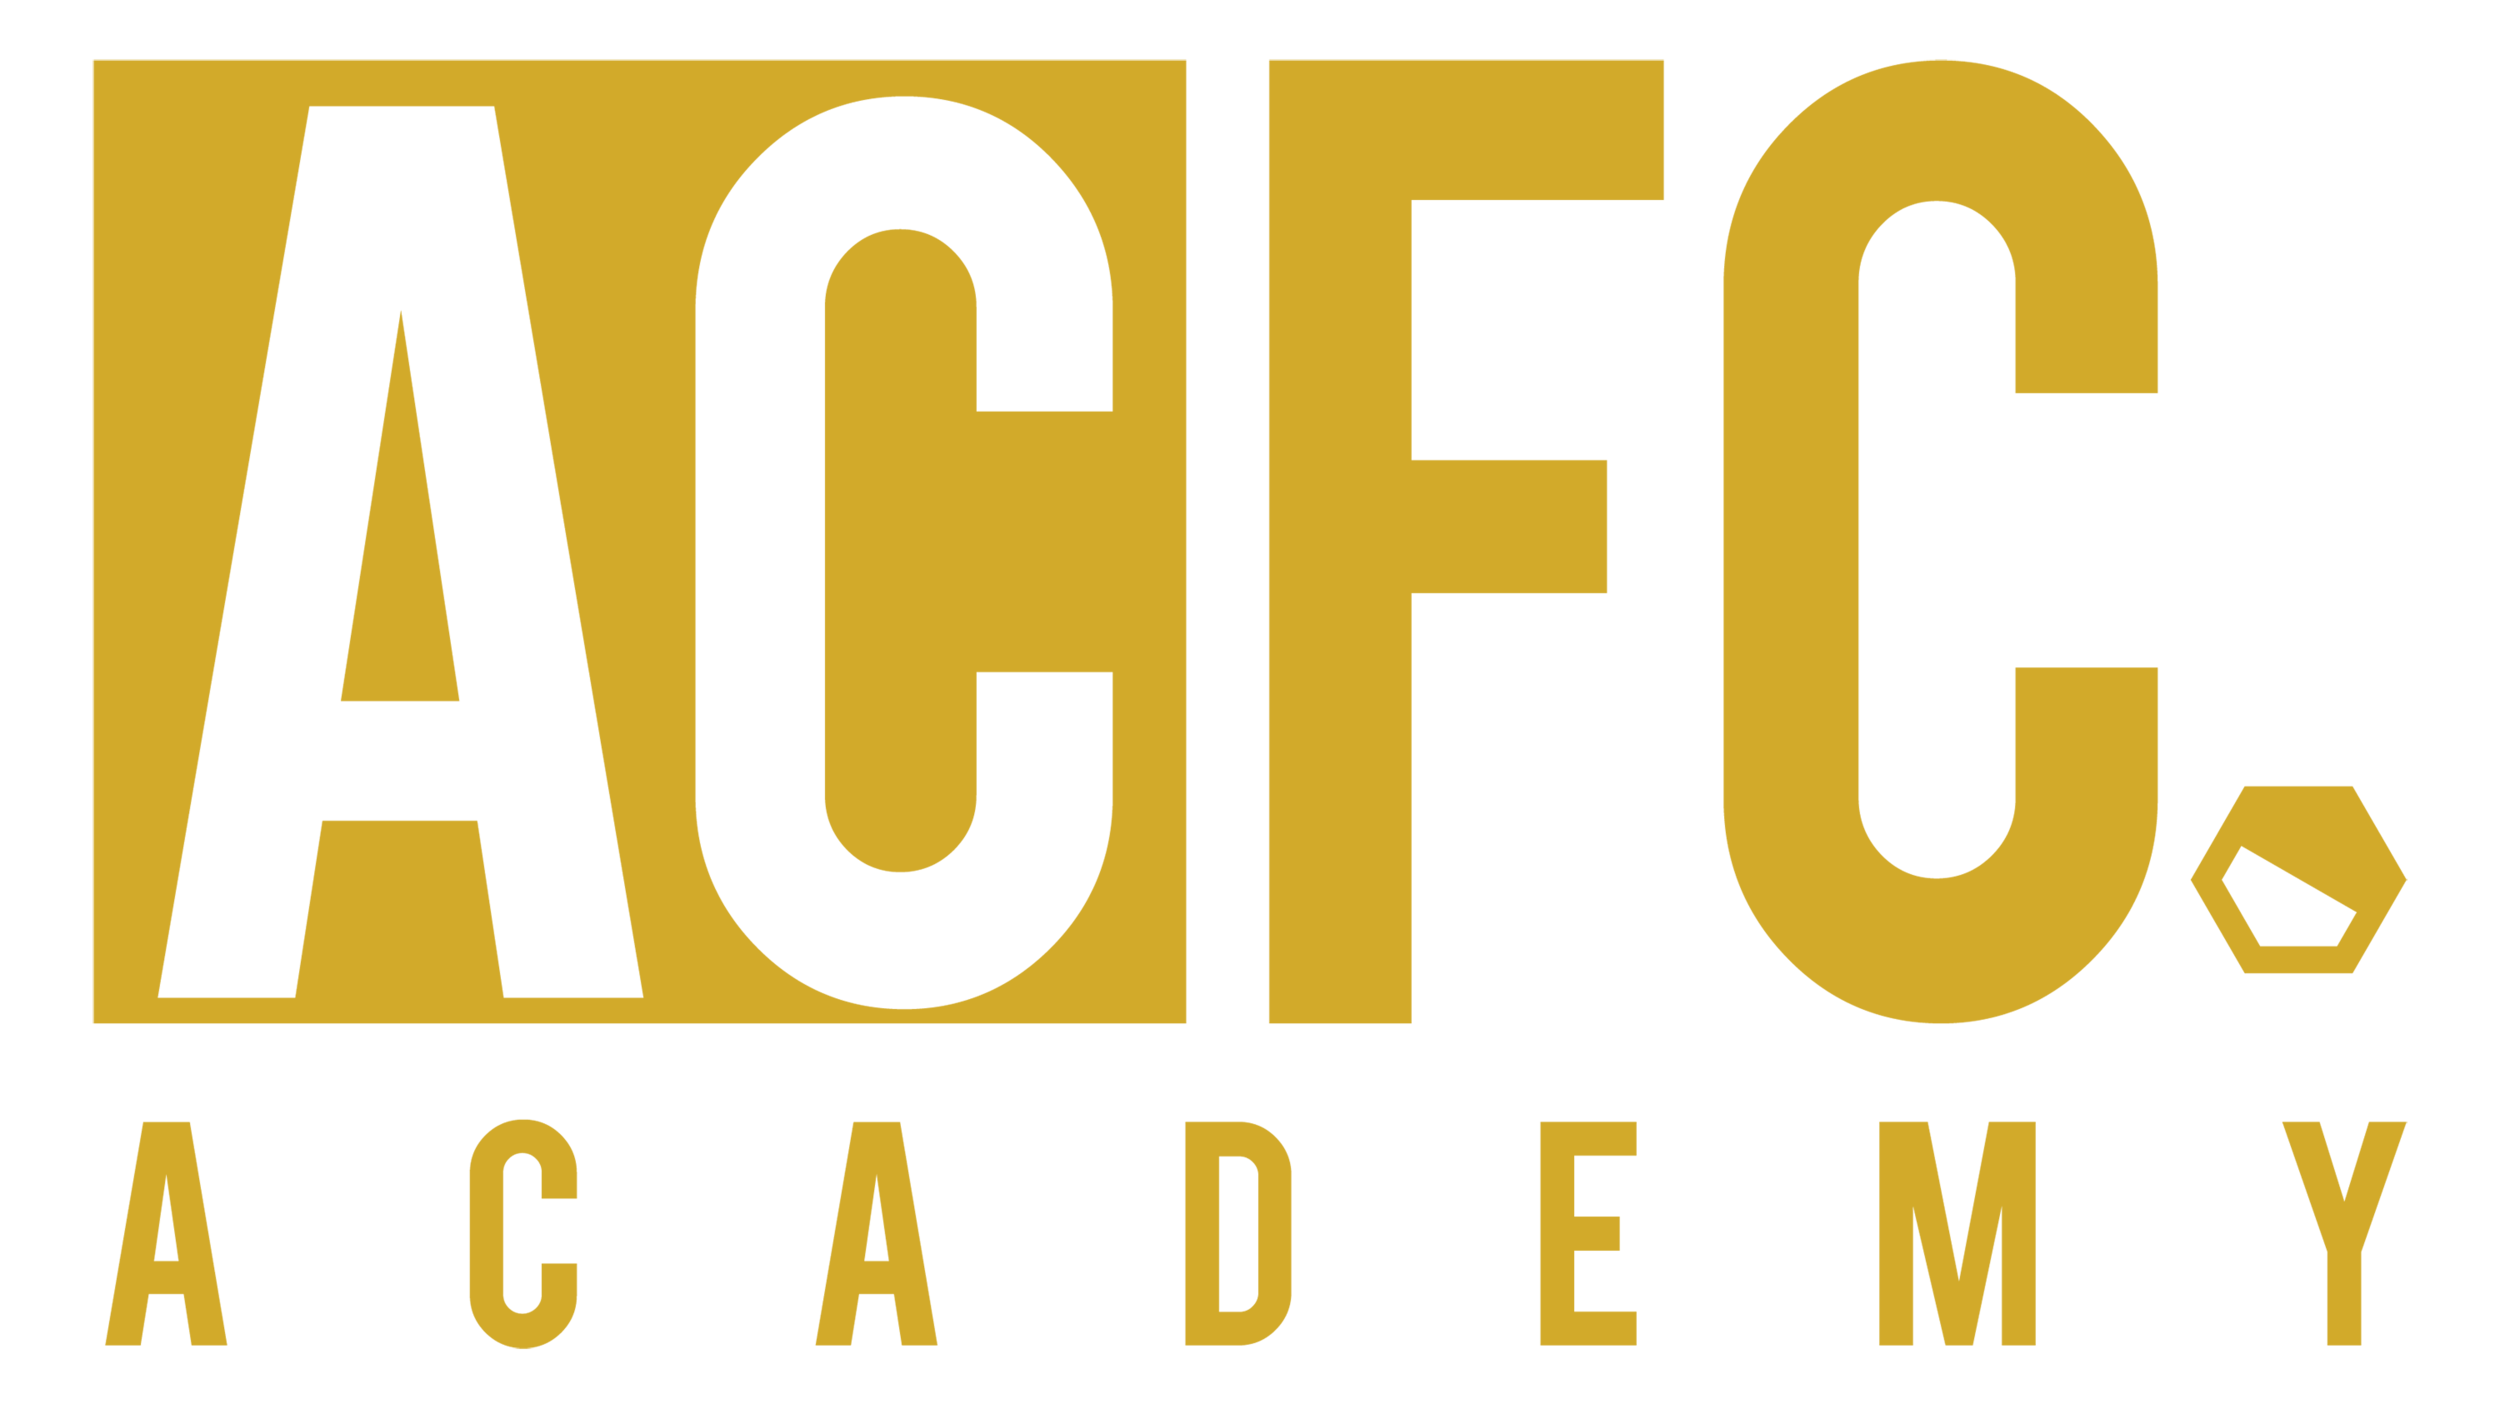 ACFC Academy - Play Football In Spain 2021 Season  - Players Wanted